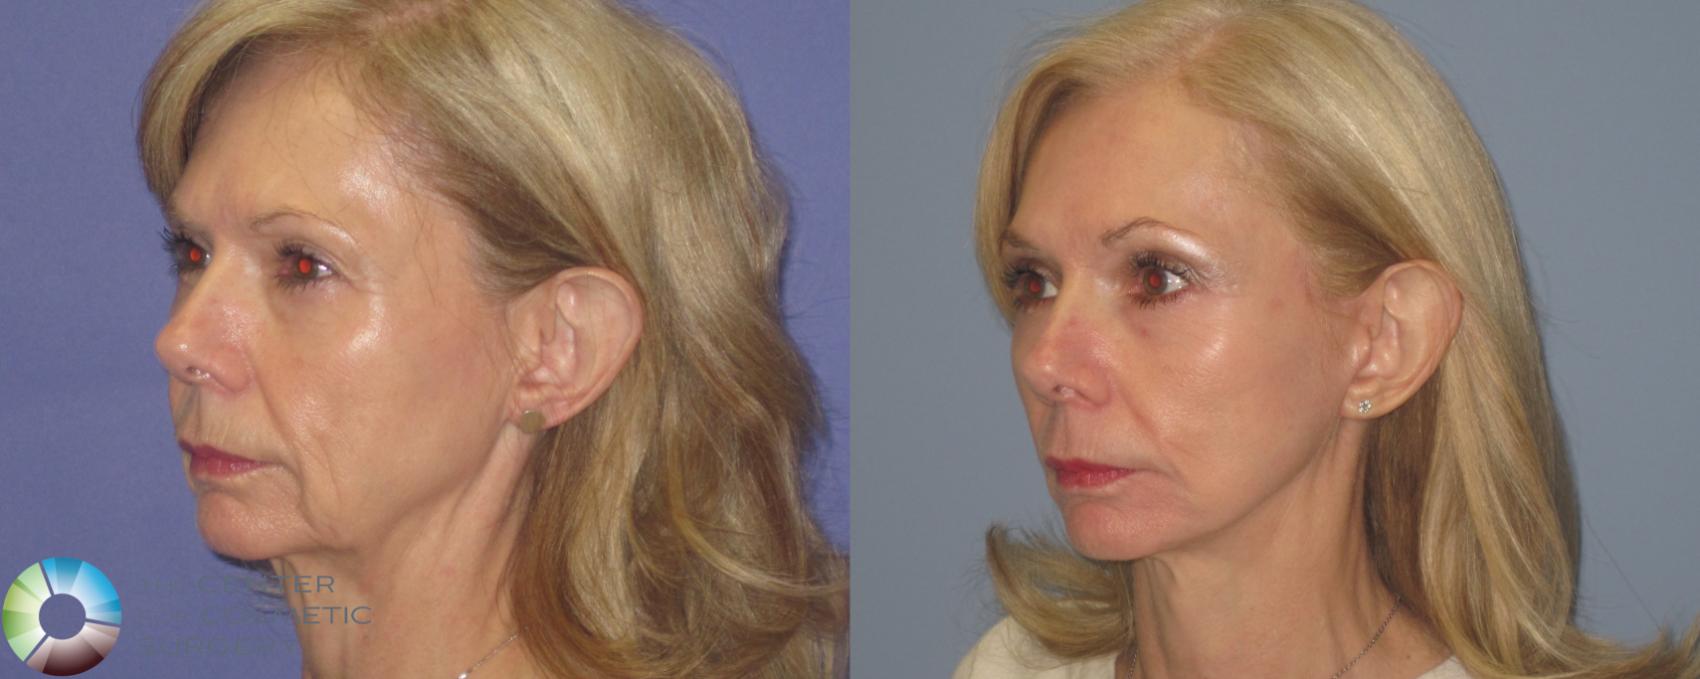 Before & After Laser Skin Resurfacing Case 460 View #2 View in Denver & Golden, CO